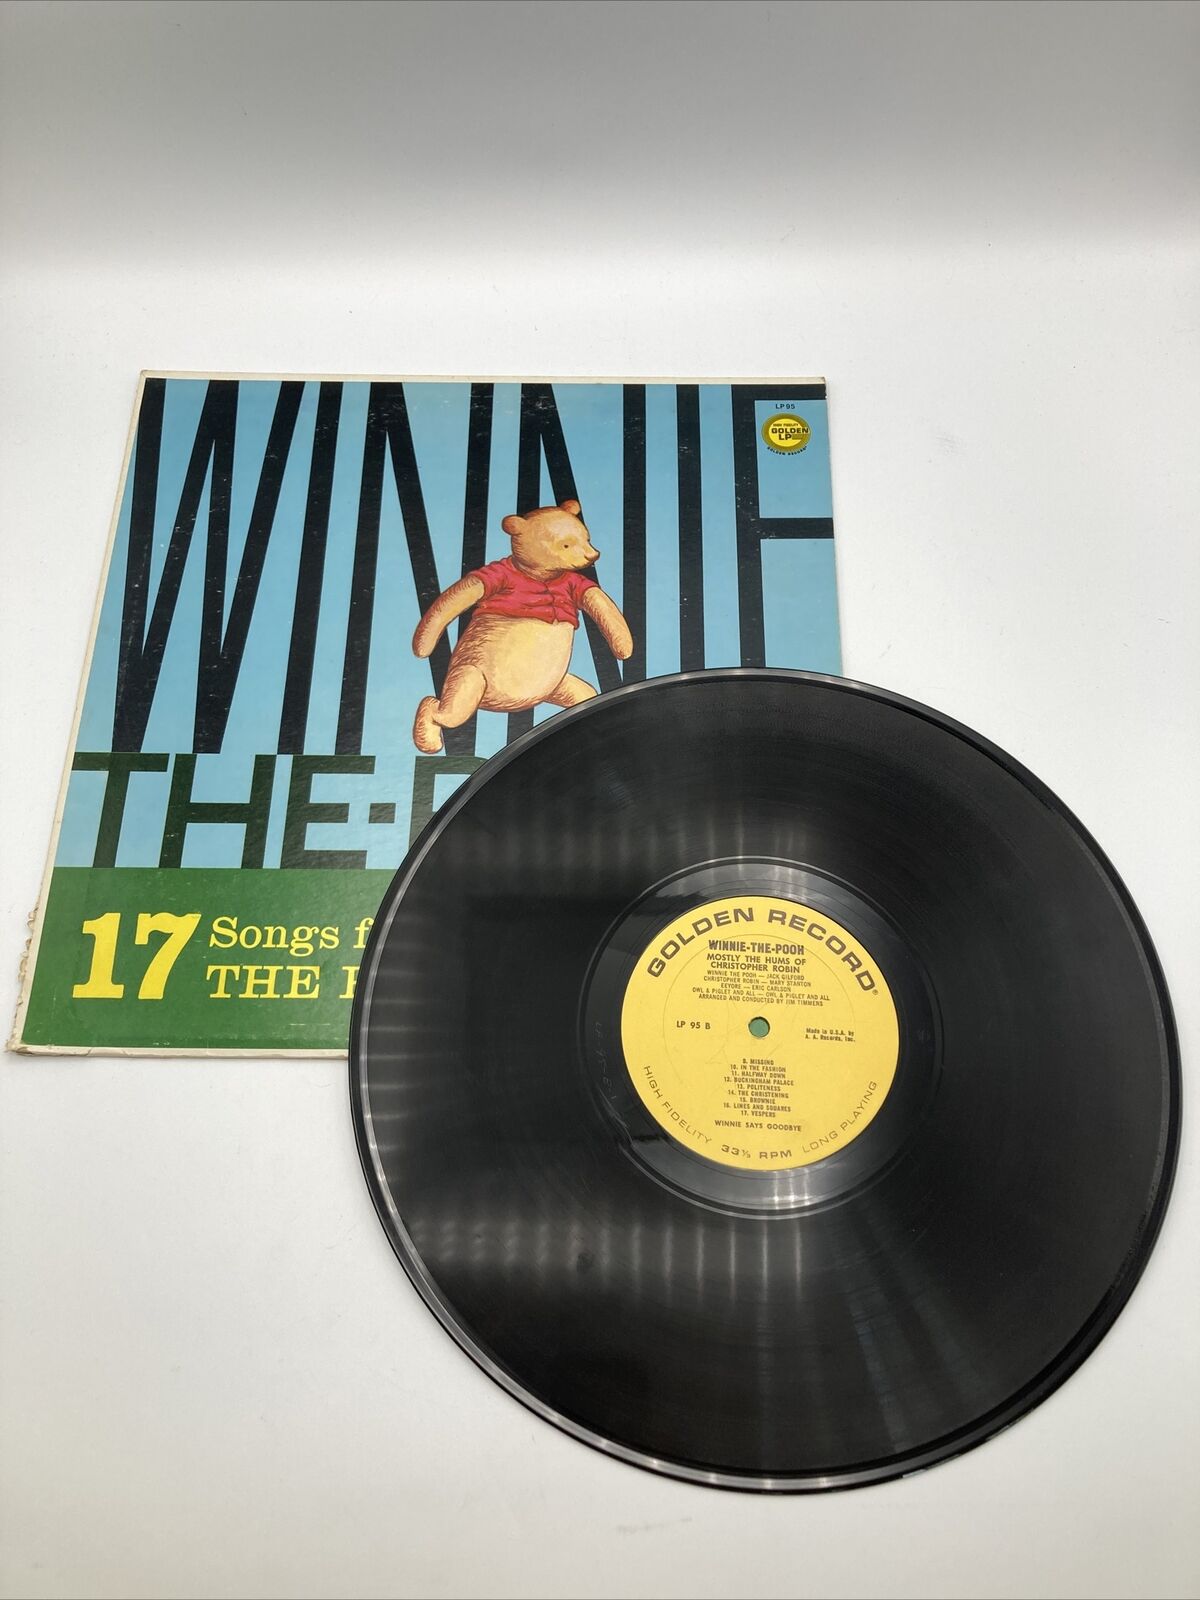 Vintage Winnie The Pooh LP Vinyl 33.5 RPM